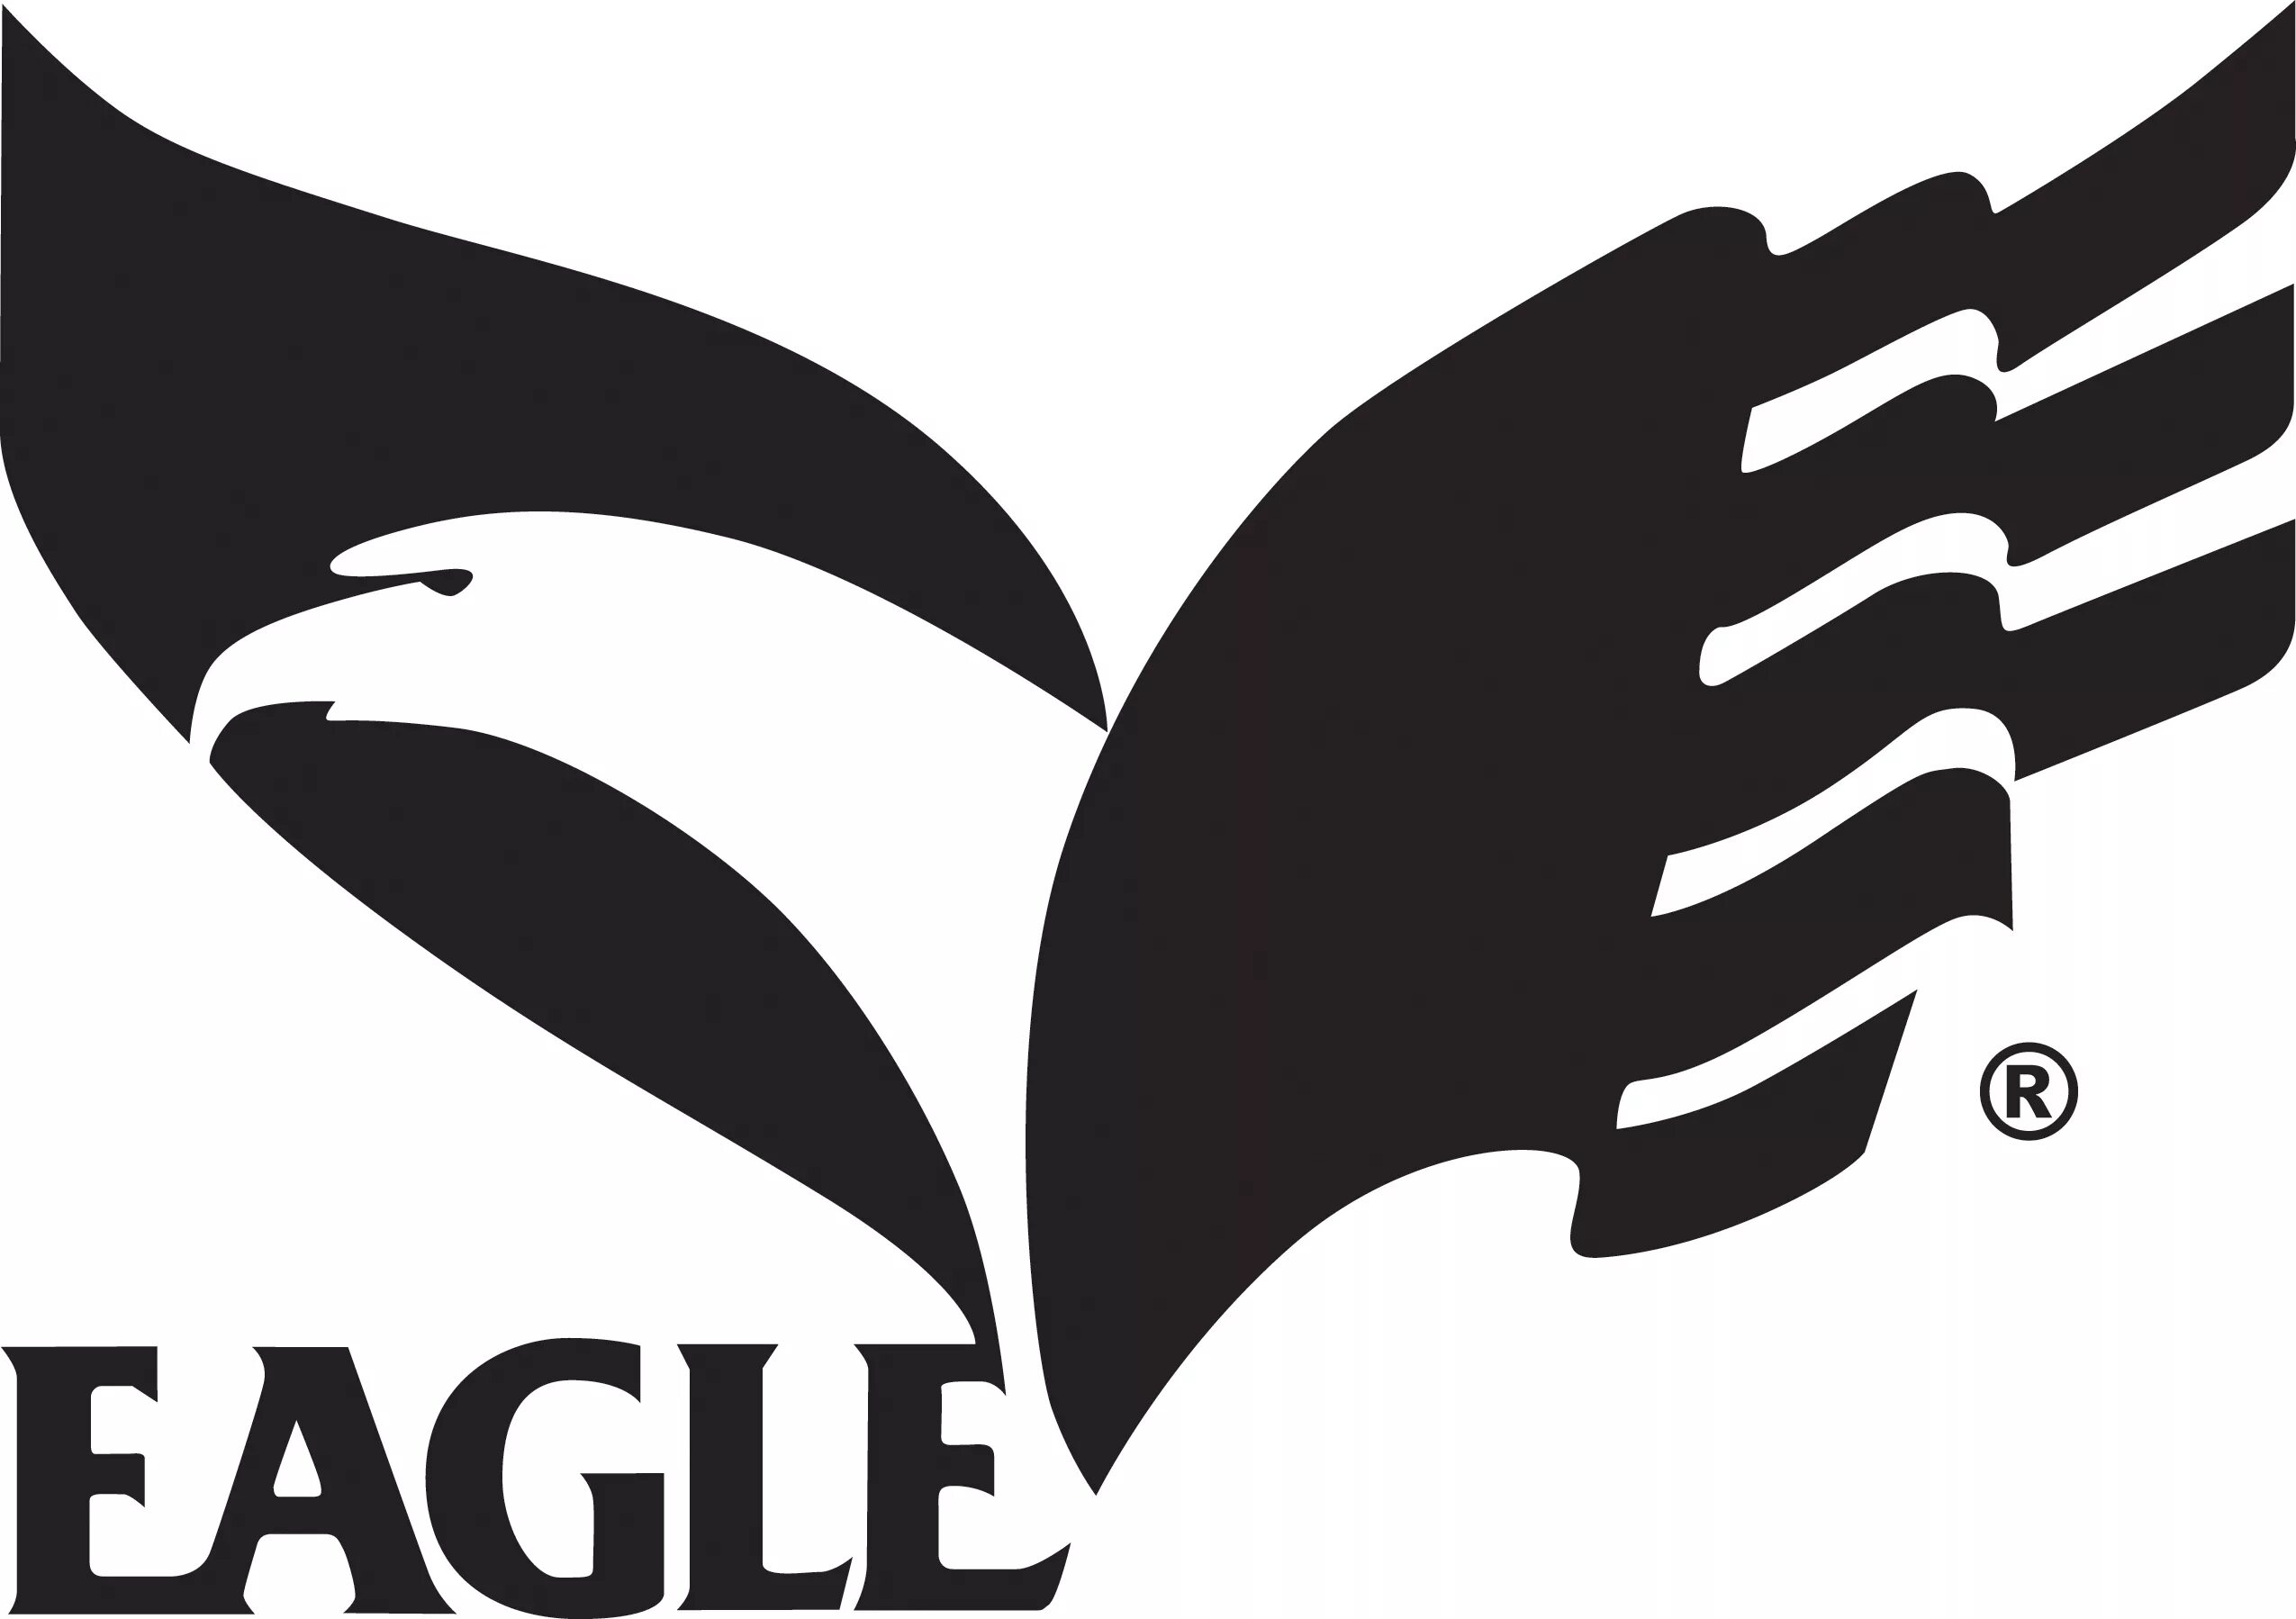 Логотип Eagle. Фирма с эмблемой орла. Беркут эмблема. Бренд с орлом на логотипе.